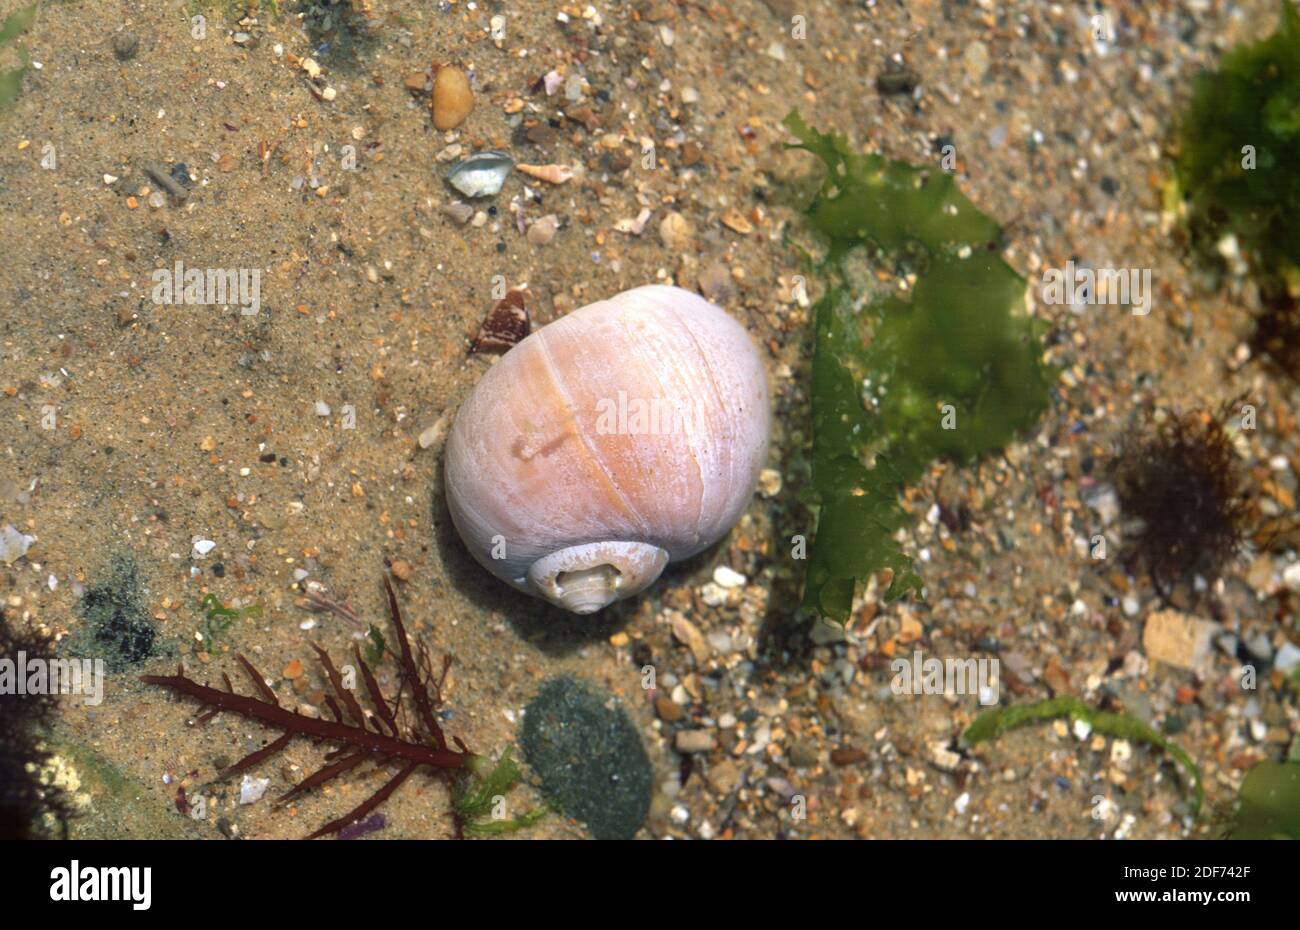 El caracol grande (Euspira catena o Natica catena) es un caracol marino carnívoro. Foto de stock